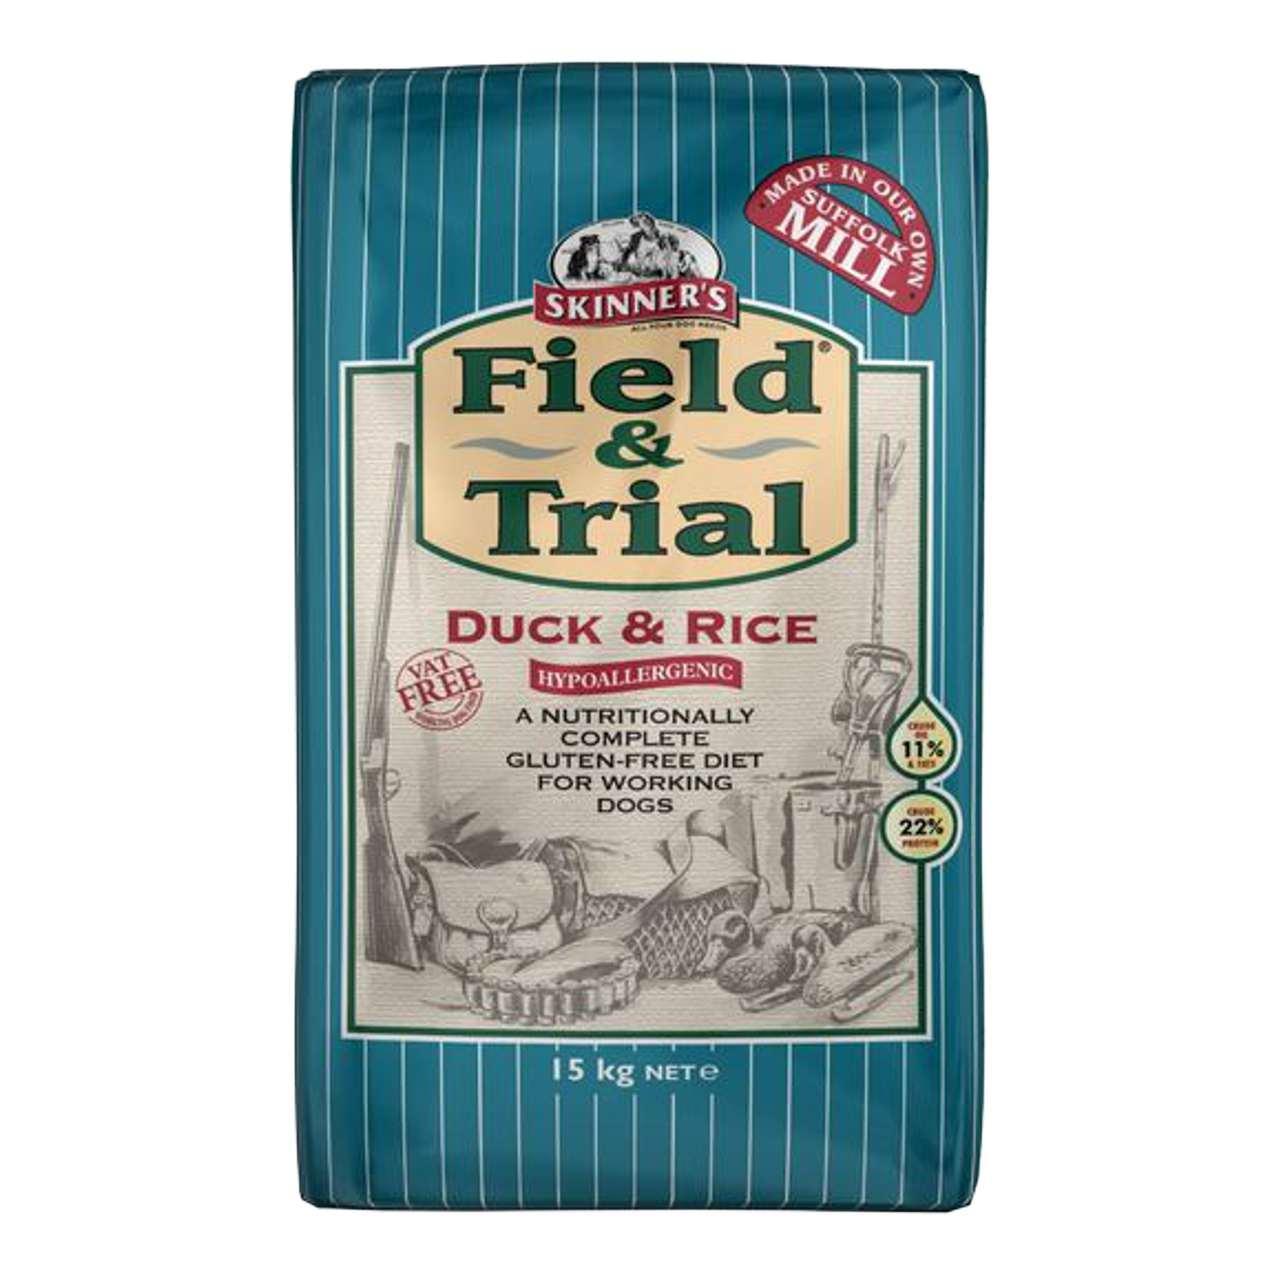 Skinner's Field & Trial Duck & Rice Hypoallergenic 15kg